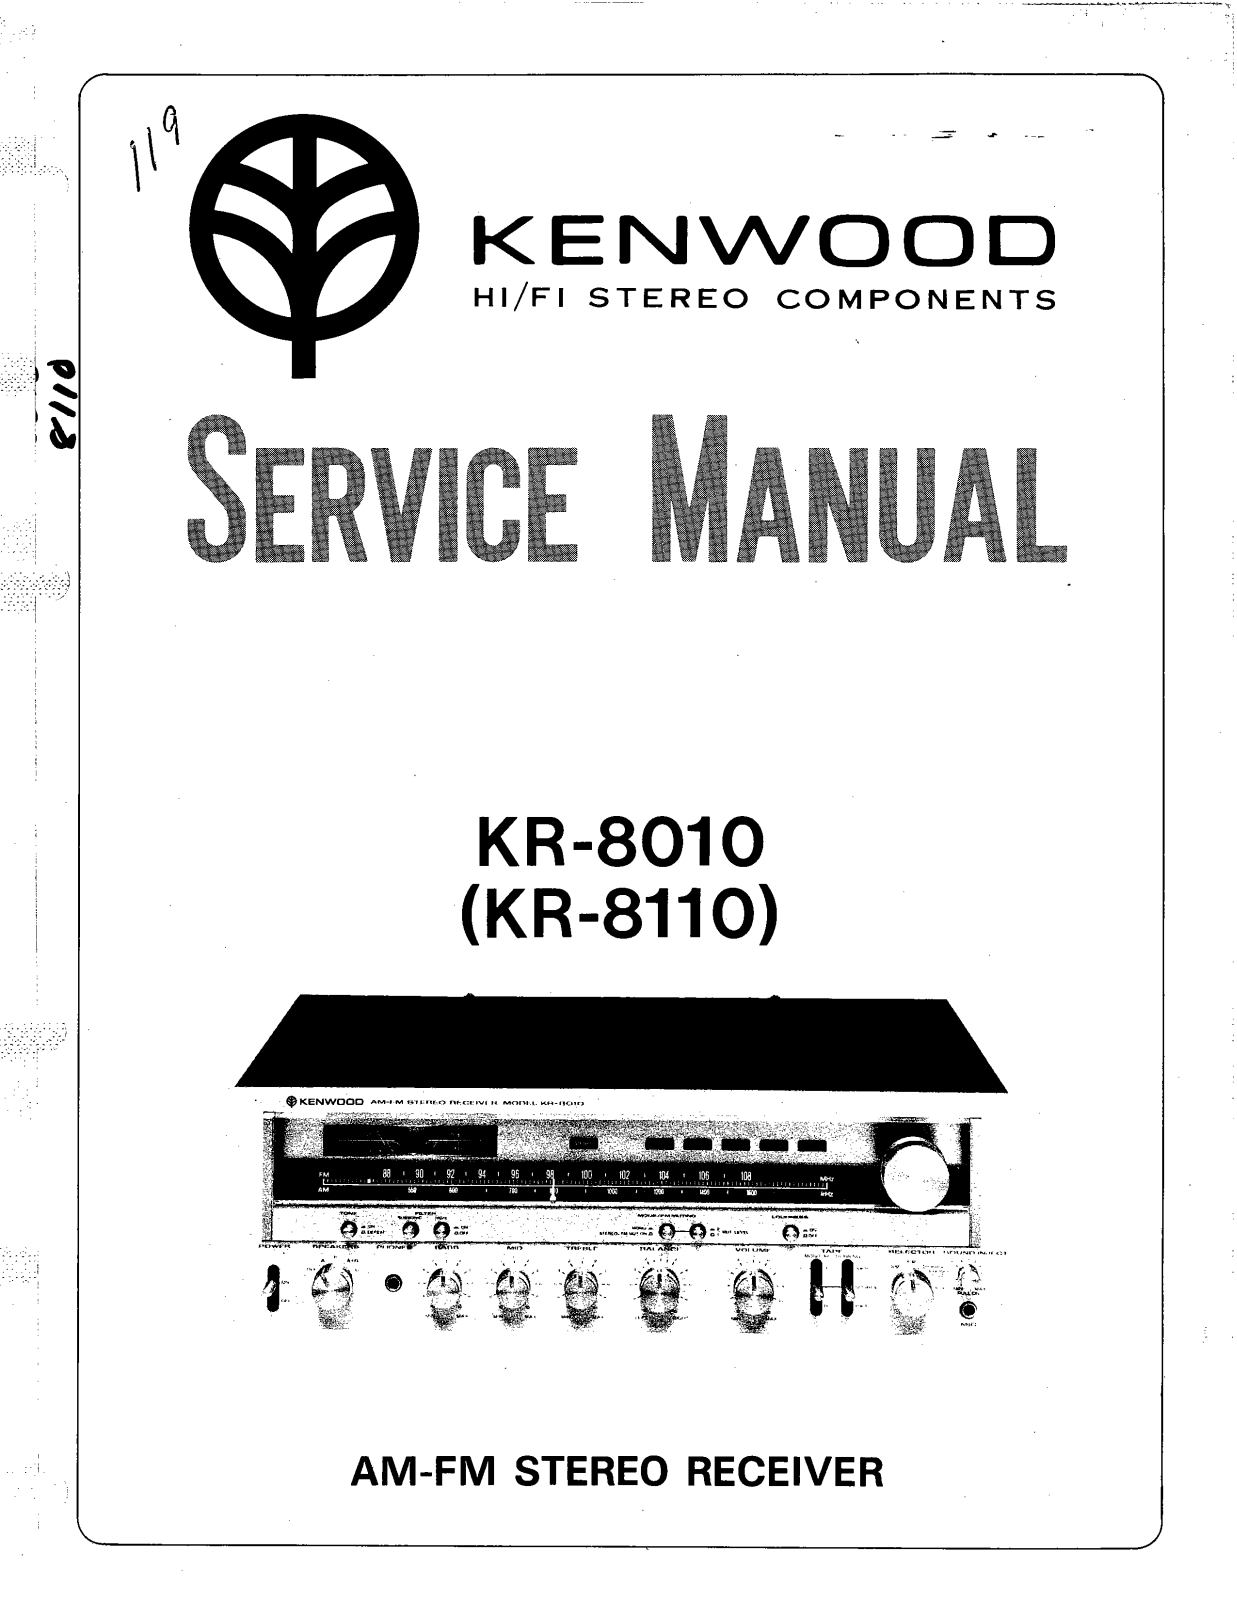 Kenwood KR-8010 Service Manual